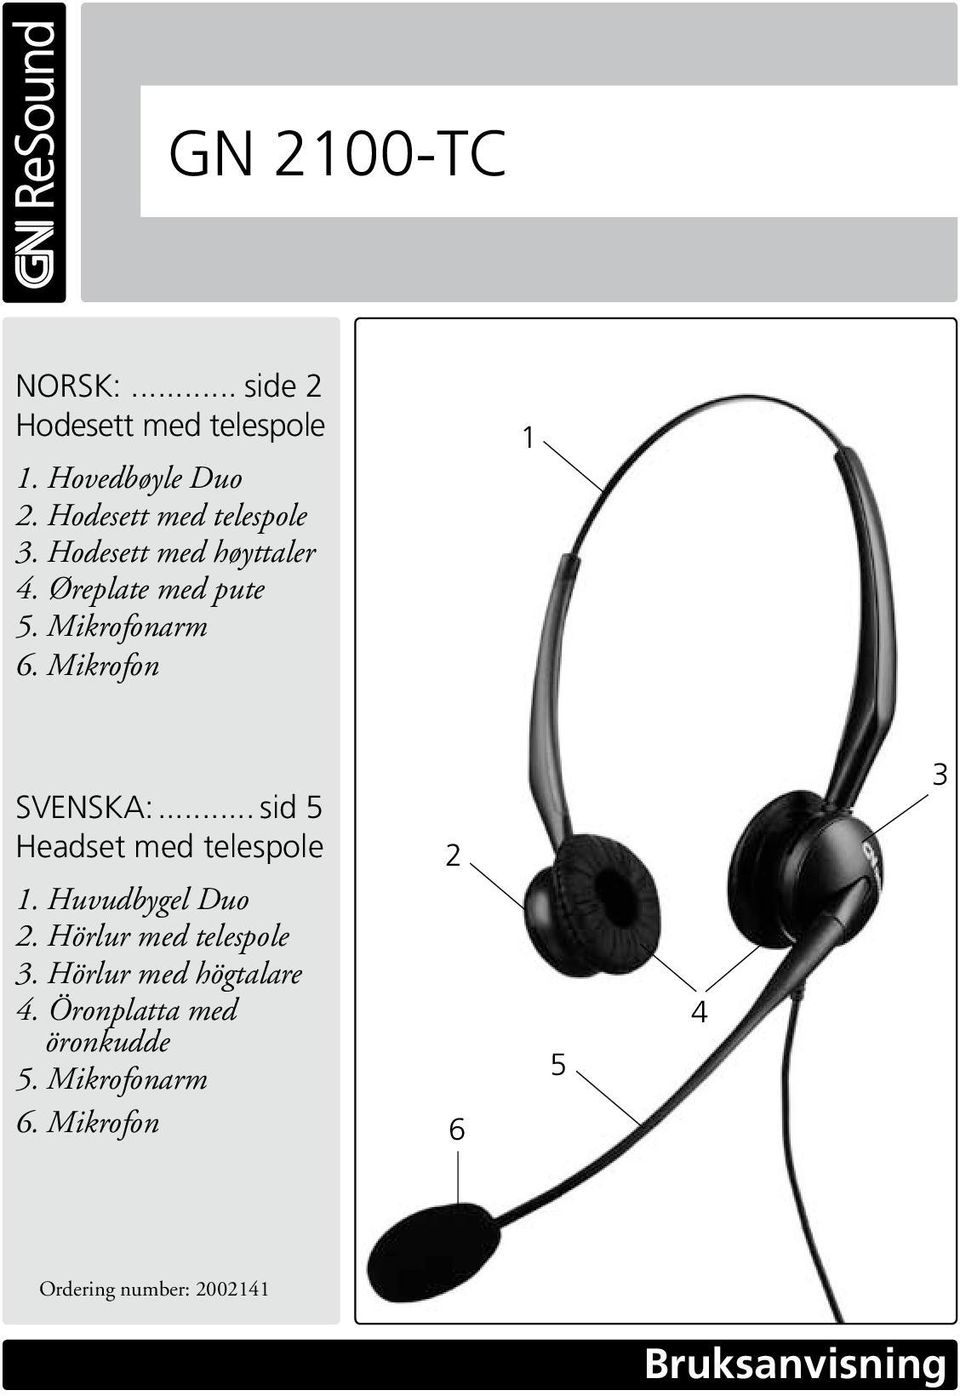 Mikrofon 1 SVENSKA:... sid 5 Headset med telespole 1. Huvudbygel Duo 2. Hörlur med telespole 3.